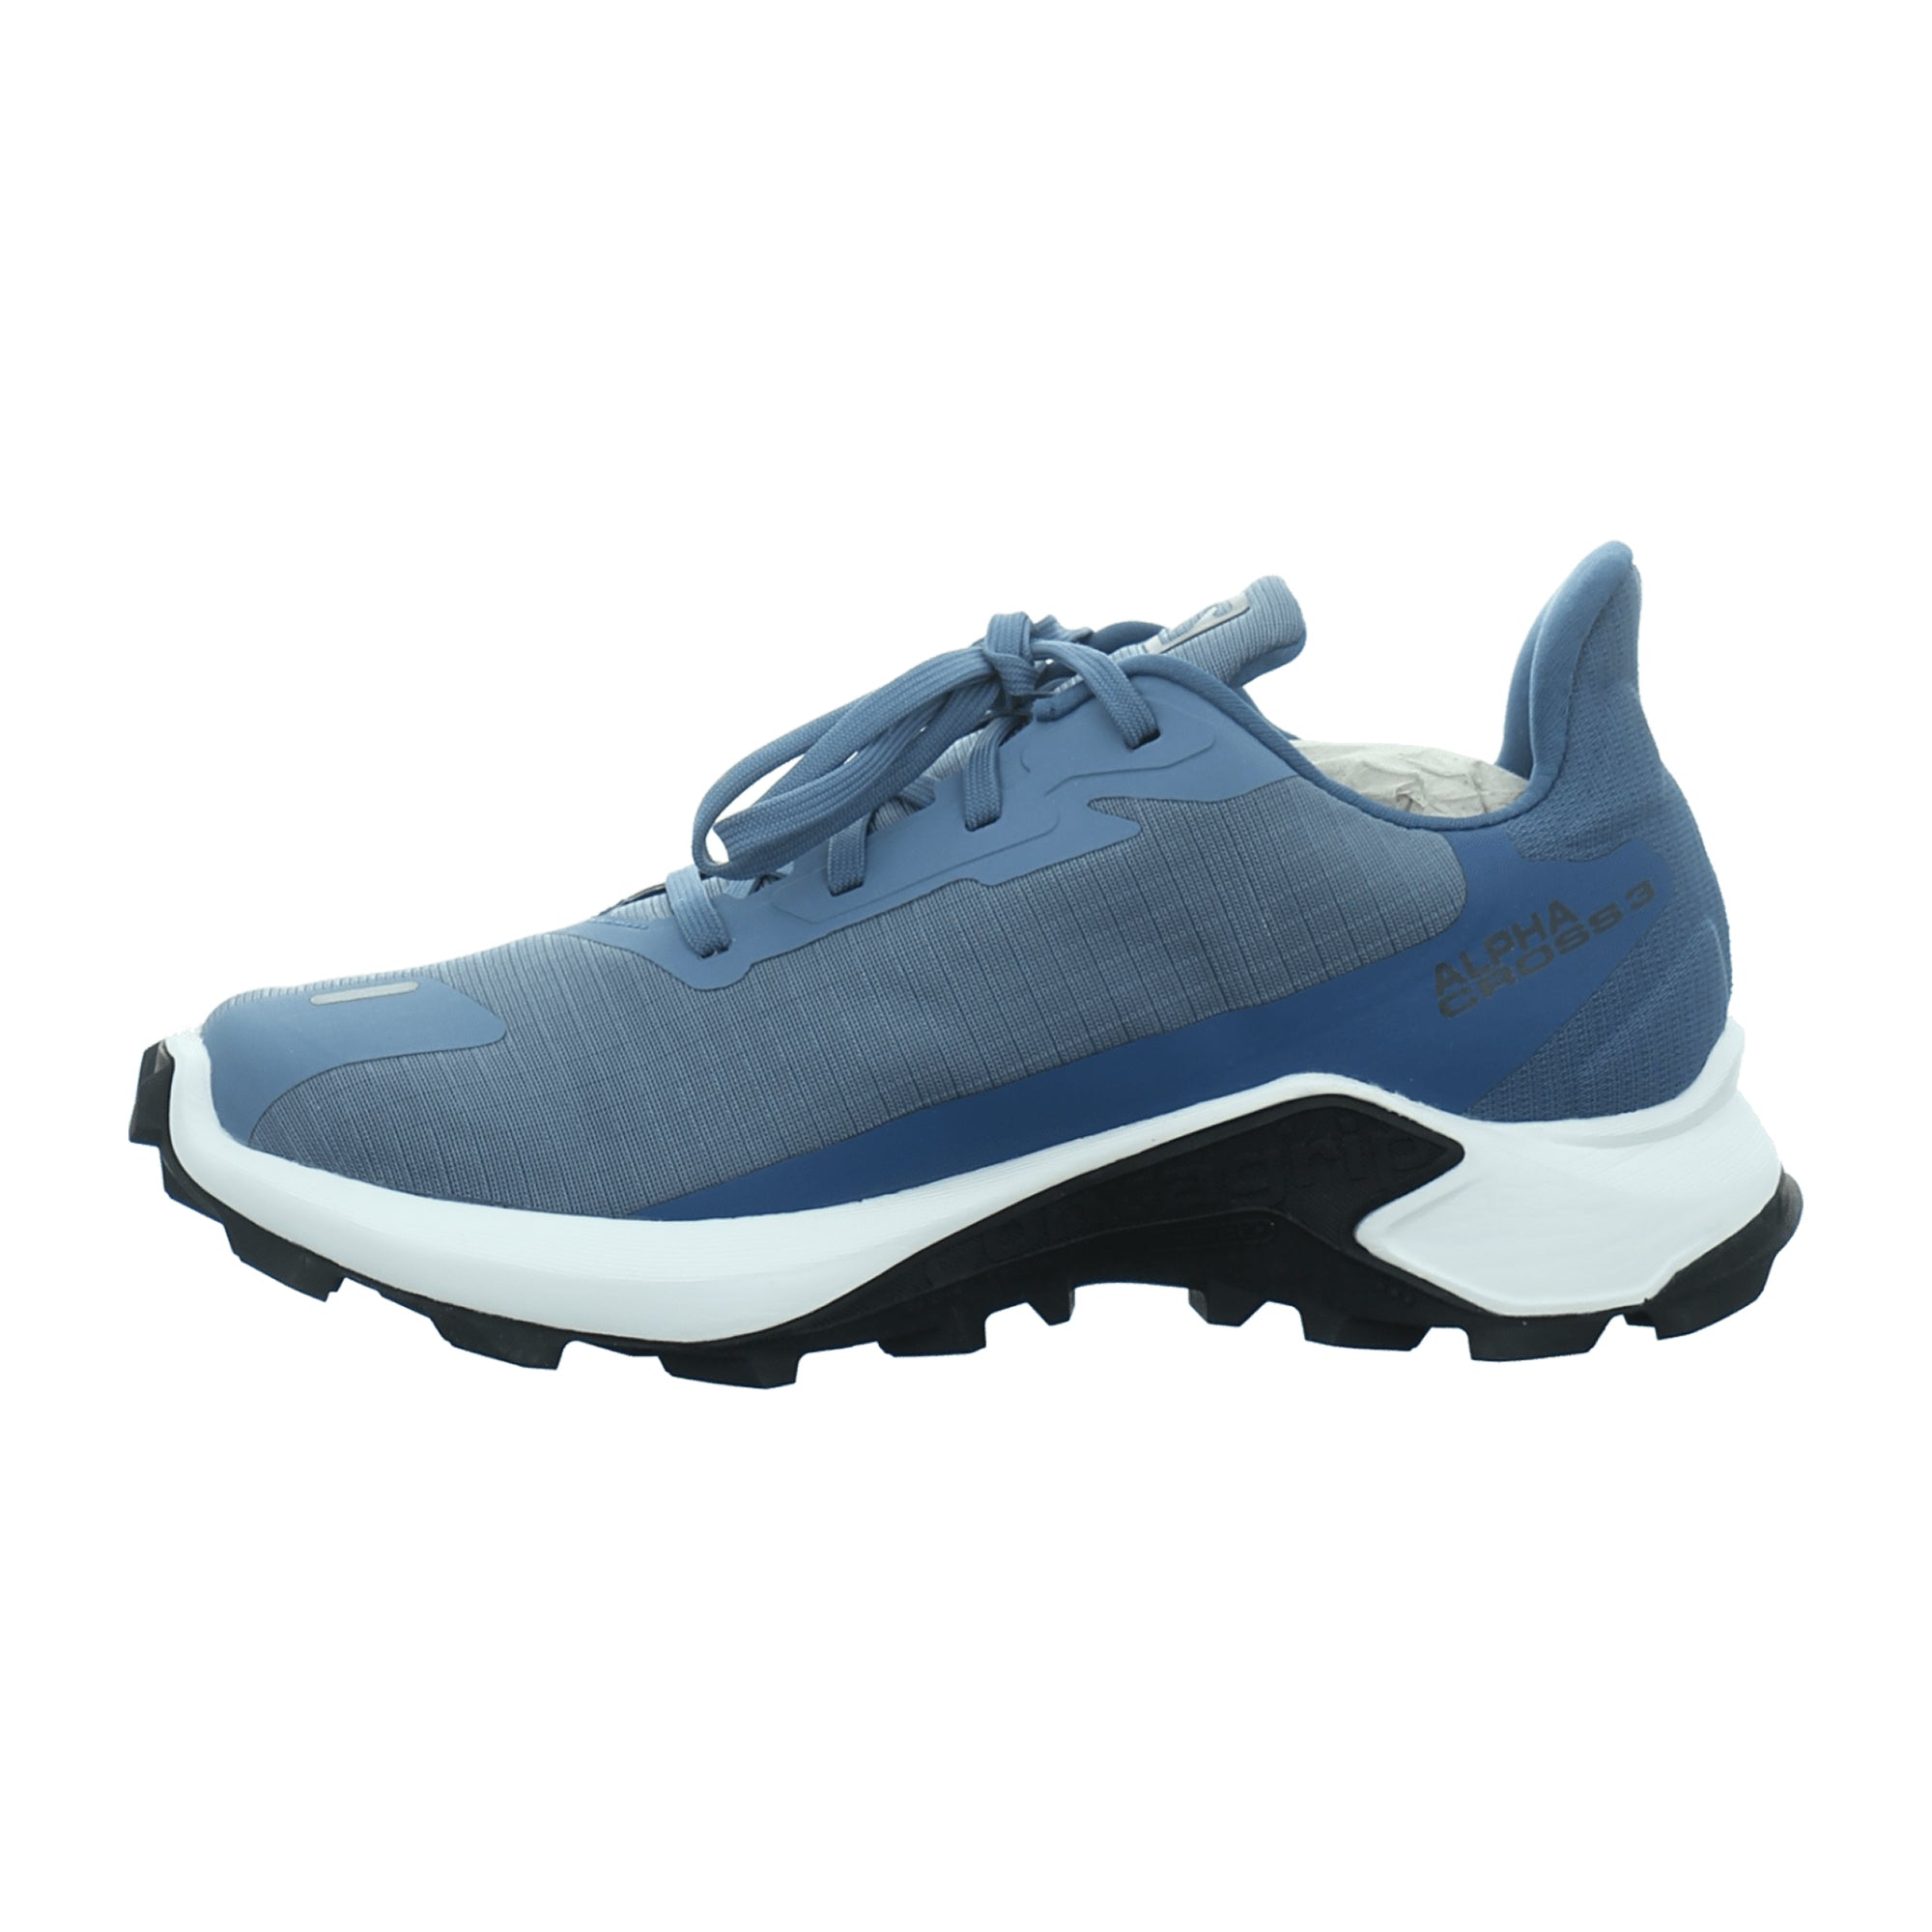 Salomon shoes ALPHACROSS 3 GTX W Blue for women, blue